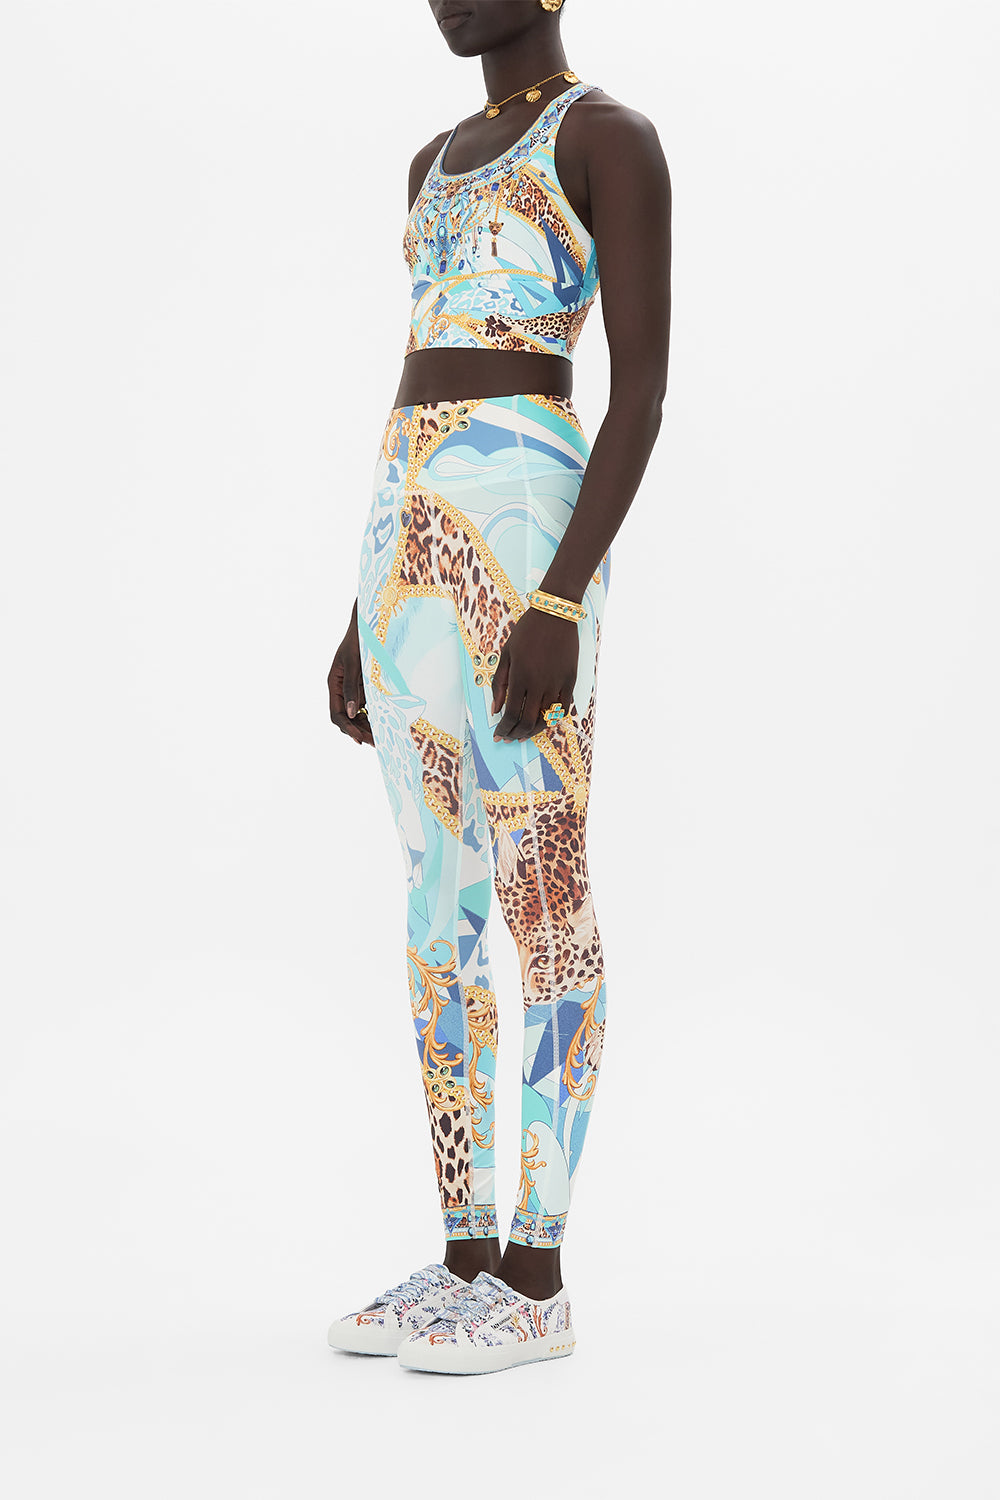 Side view of model wearing CAMILLA activewear legging in Sky Cheetah print